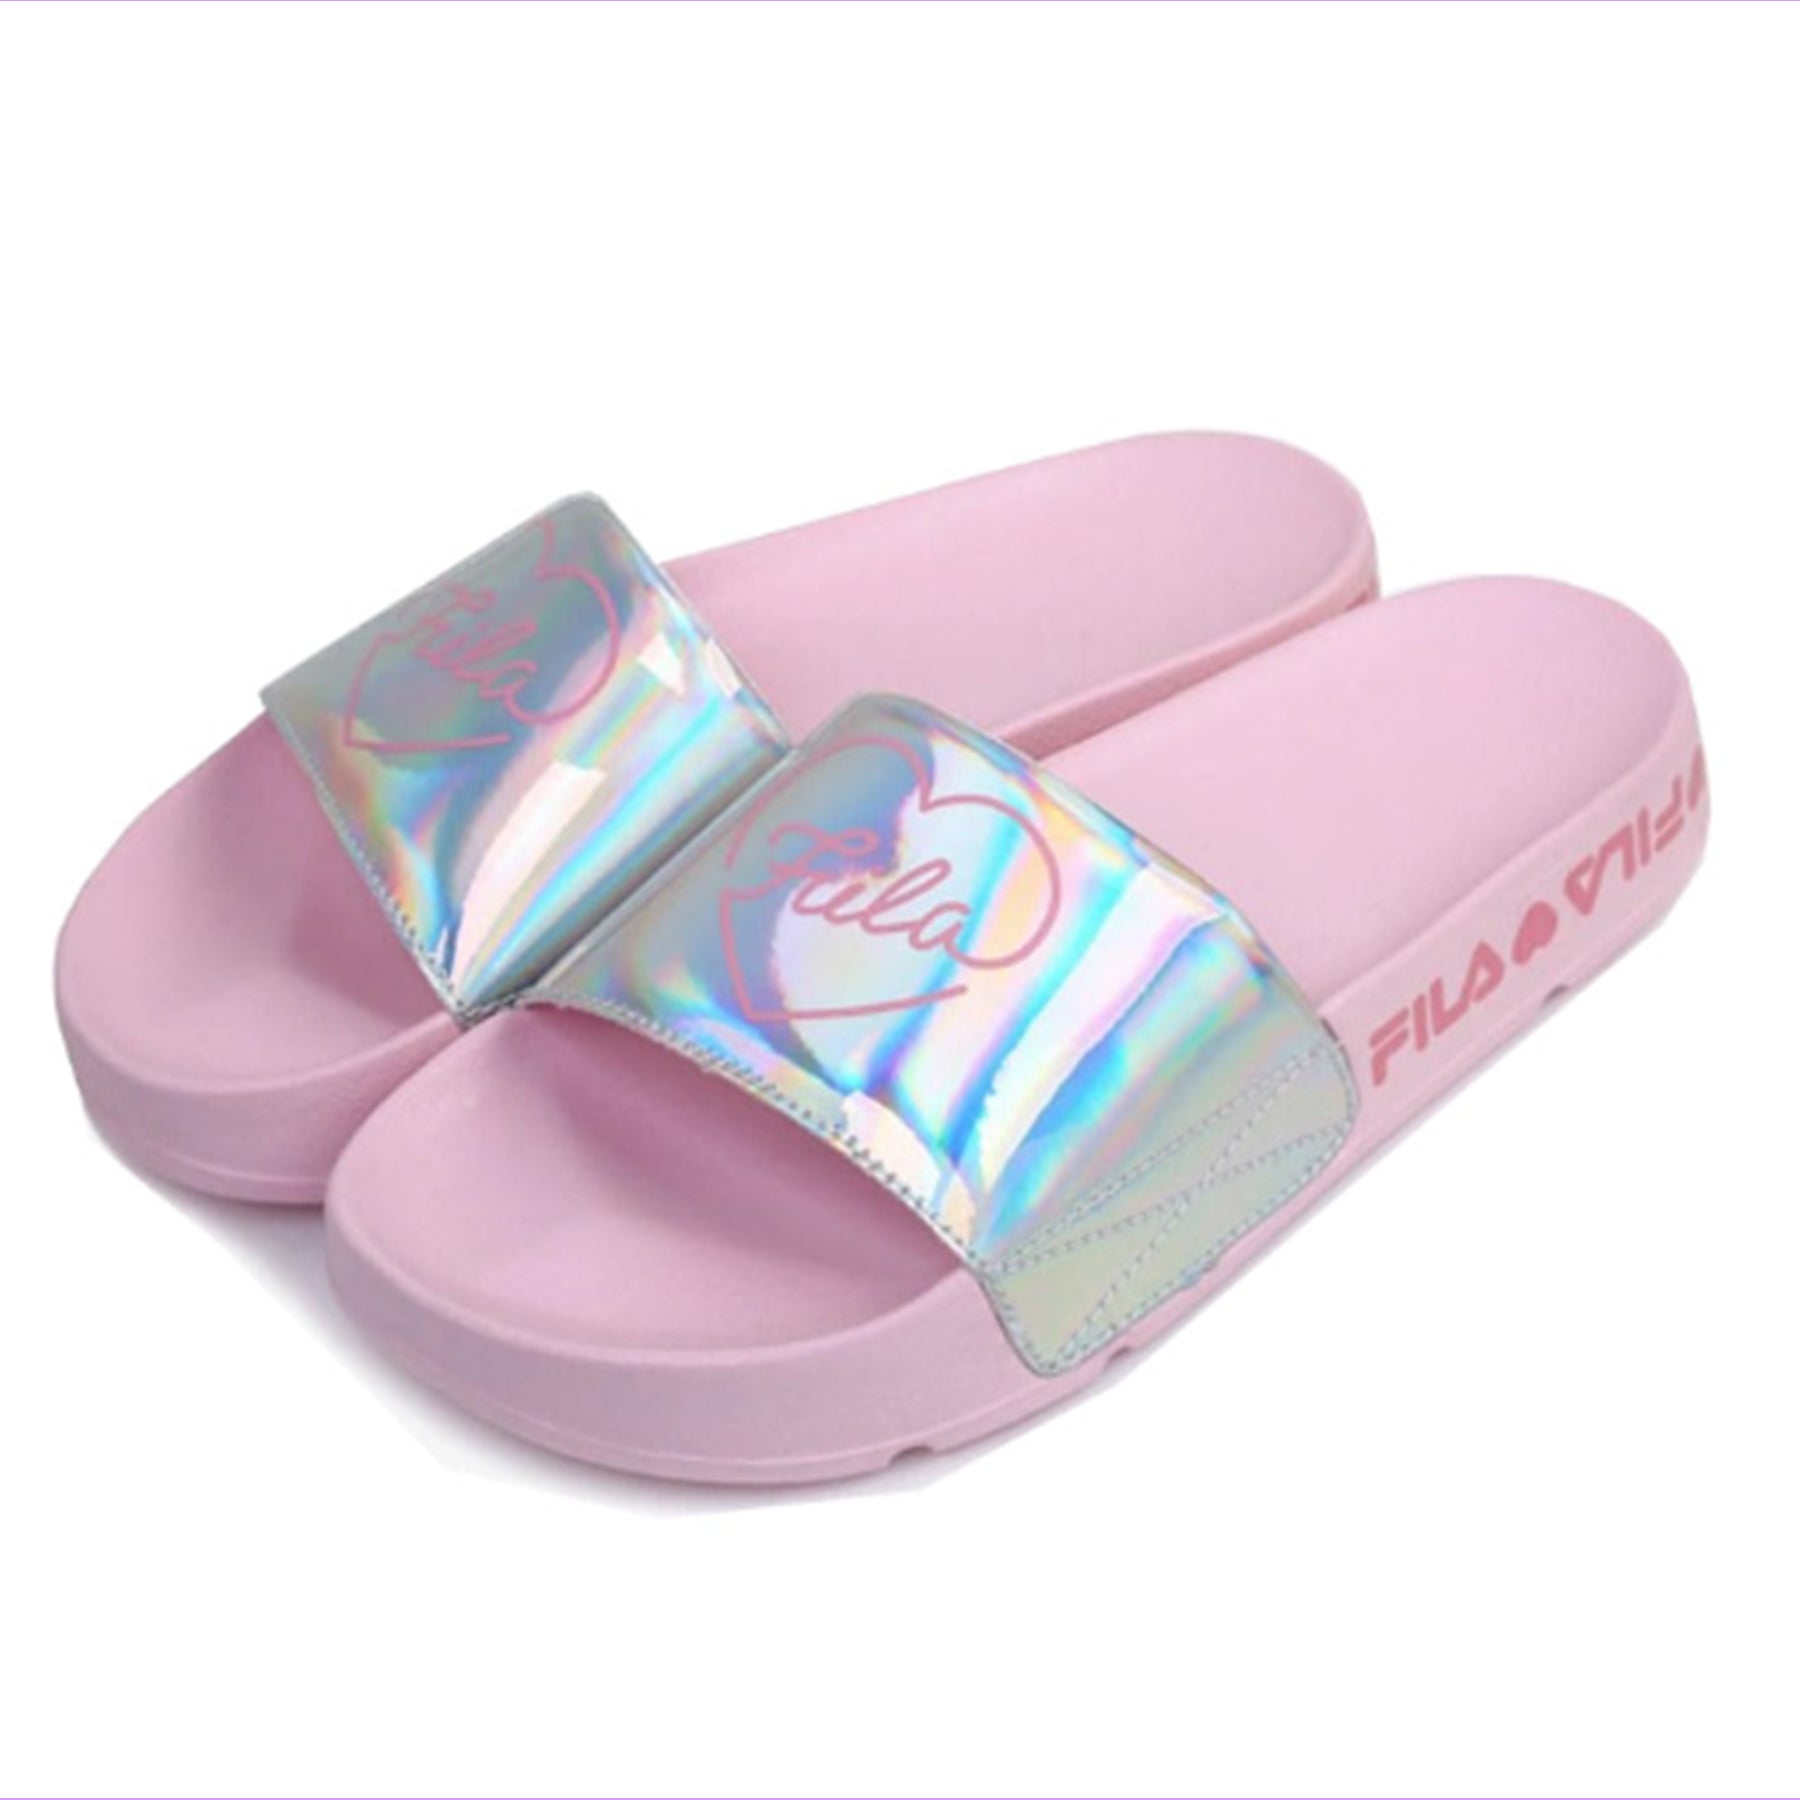 FILA Drifter V-DAY SHINY Slide Sandal Shoes (Pink) 1SM00729 - YOUAREMYPOISON